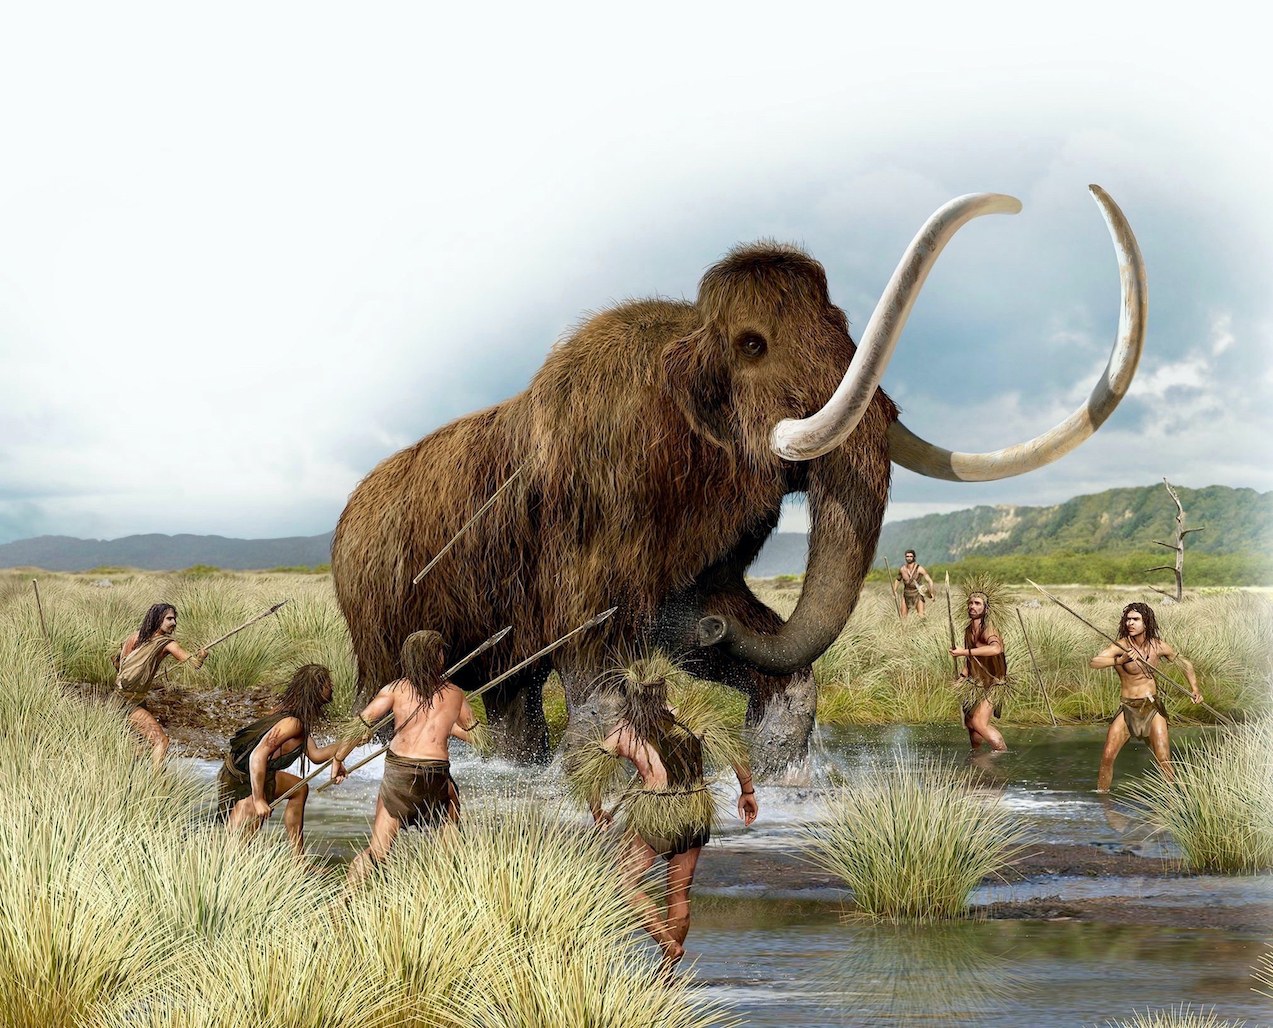 Alaska Magazine | The last mammoth in Alaska